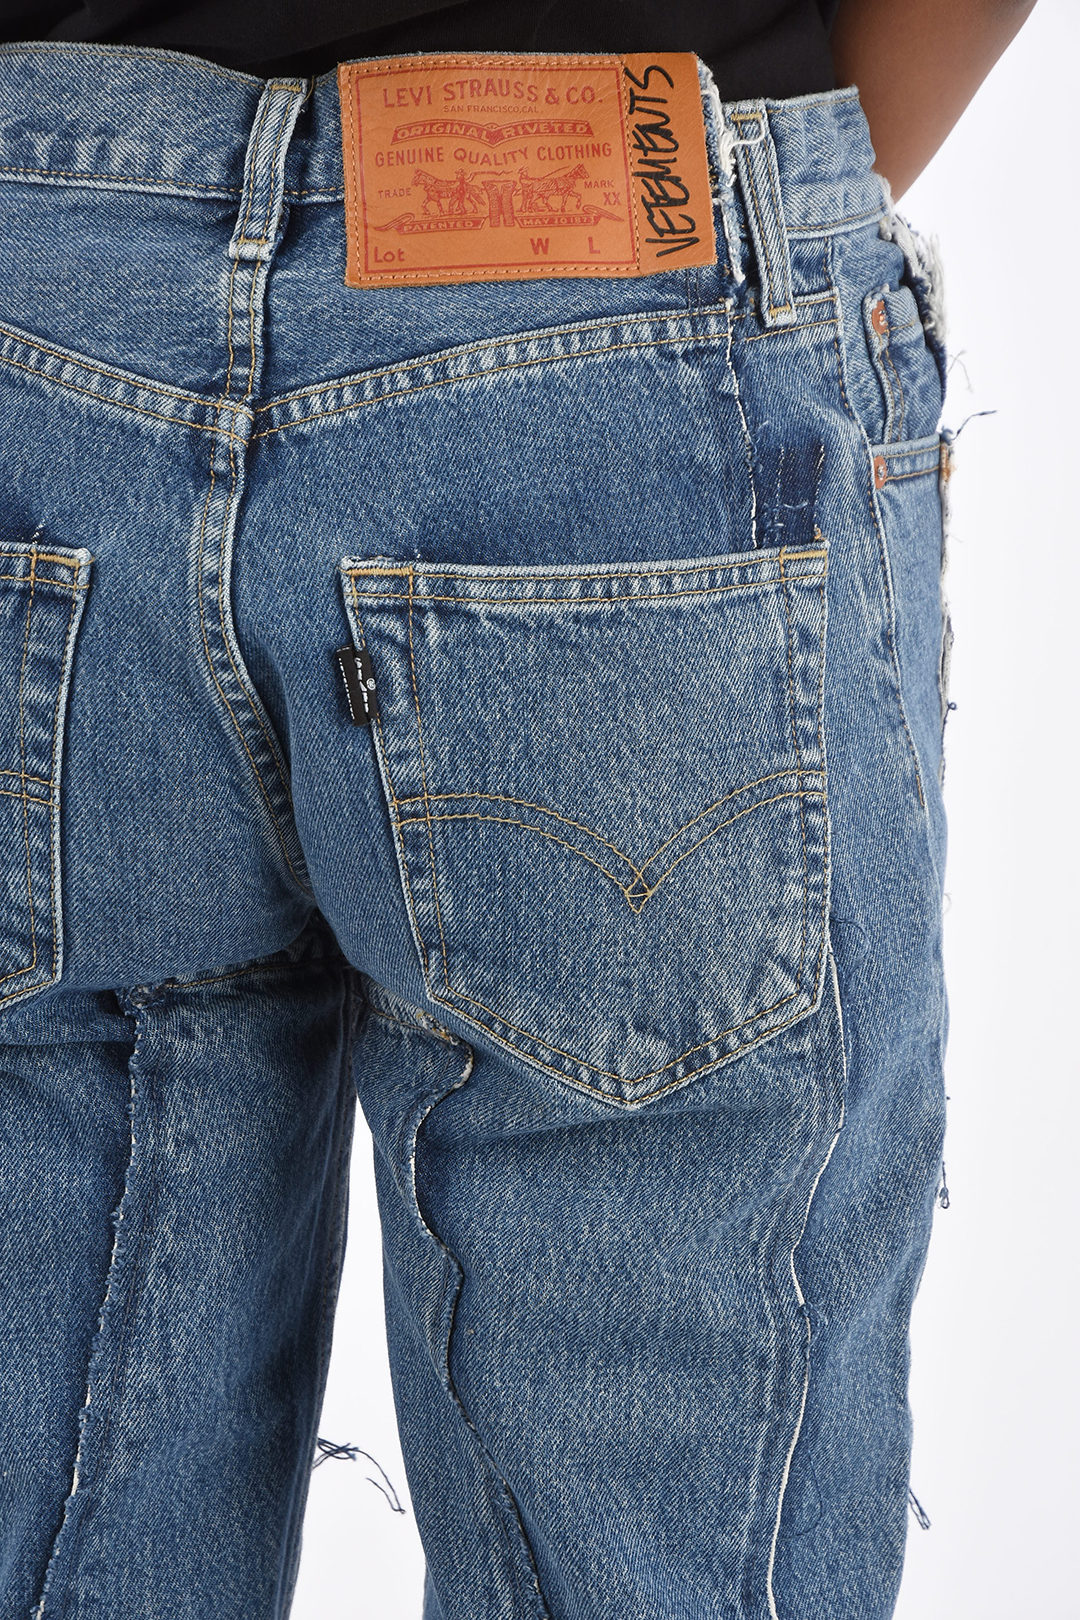 Vetements LEVI'S Jeans damen - Glamood Outlet